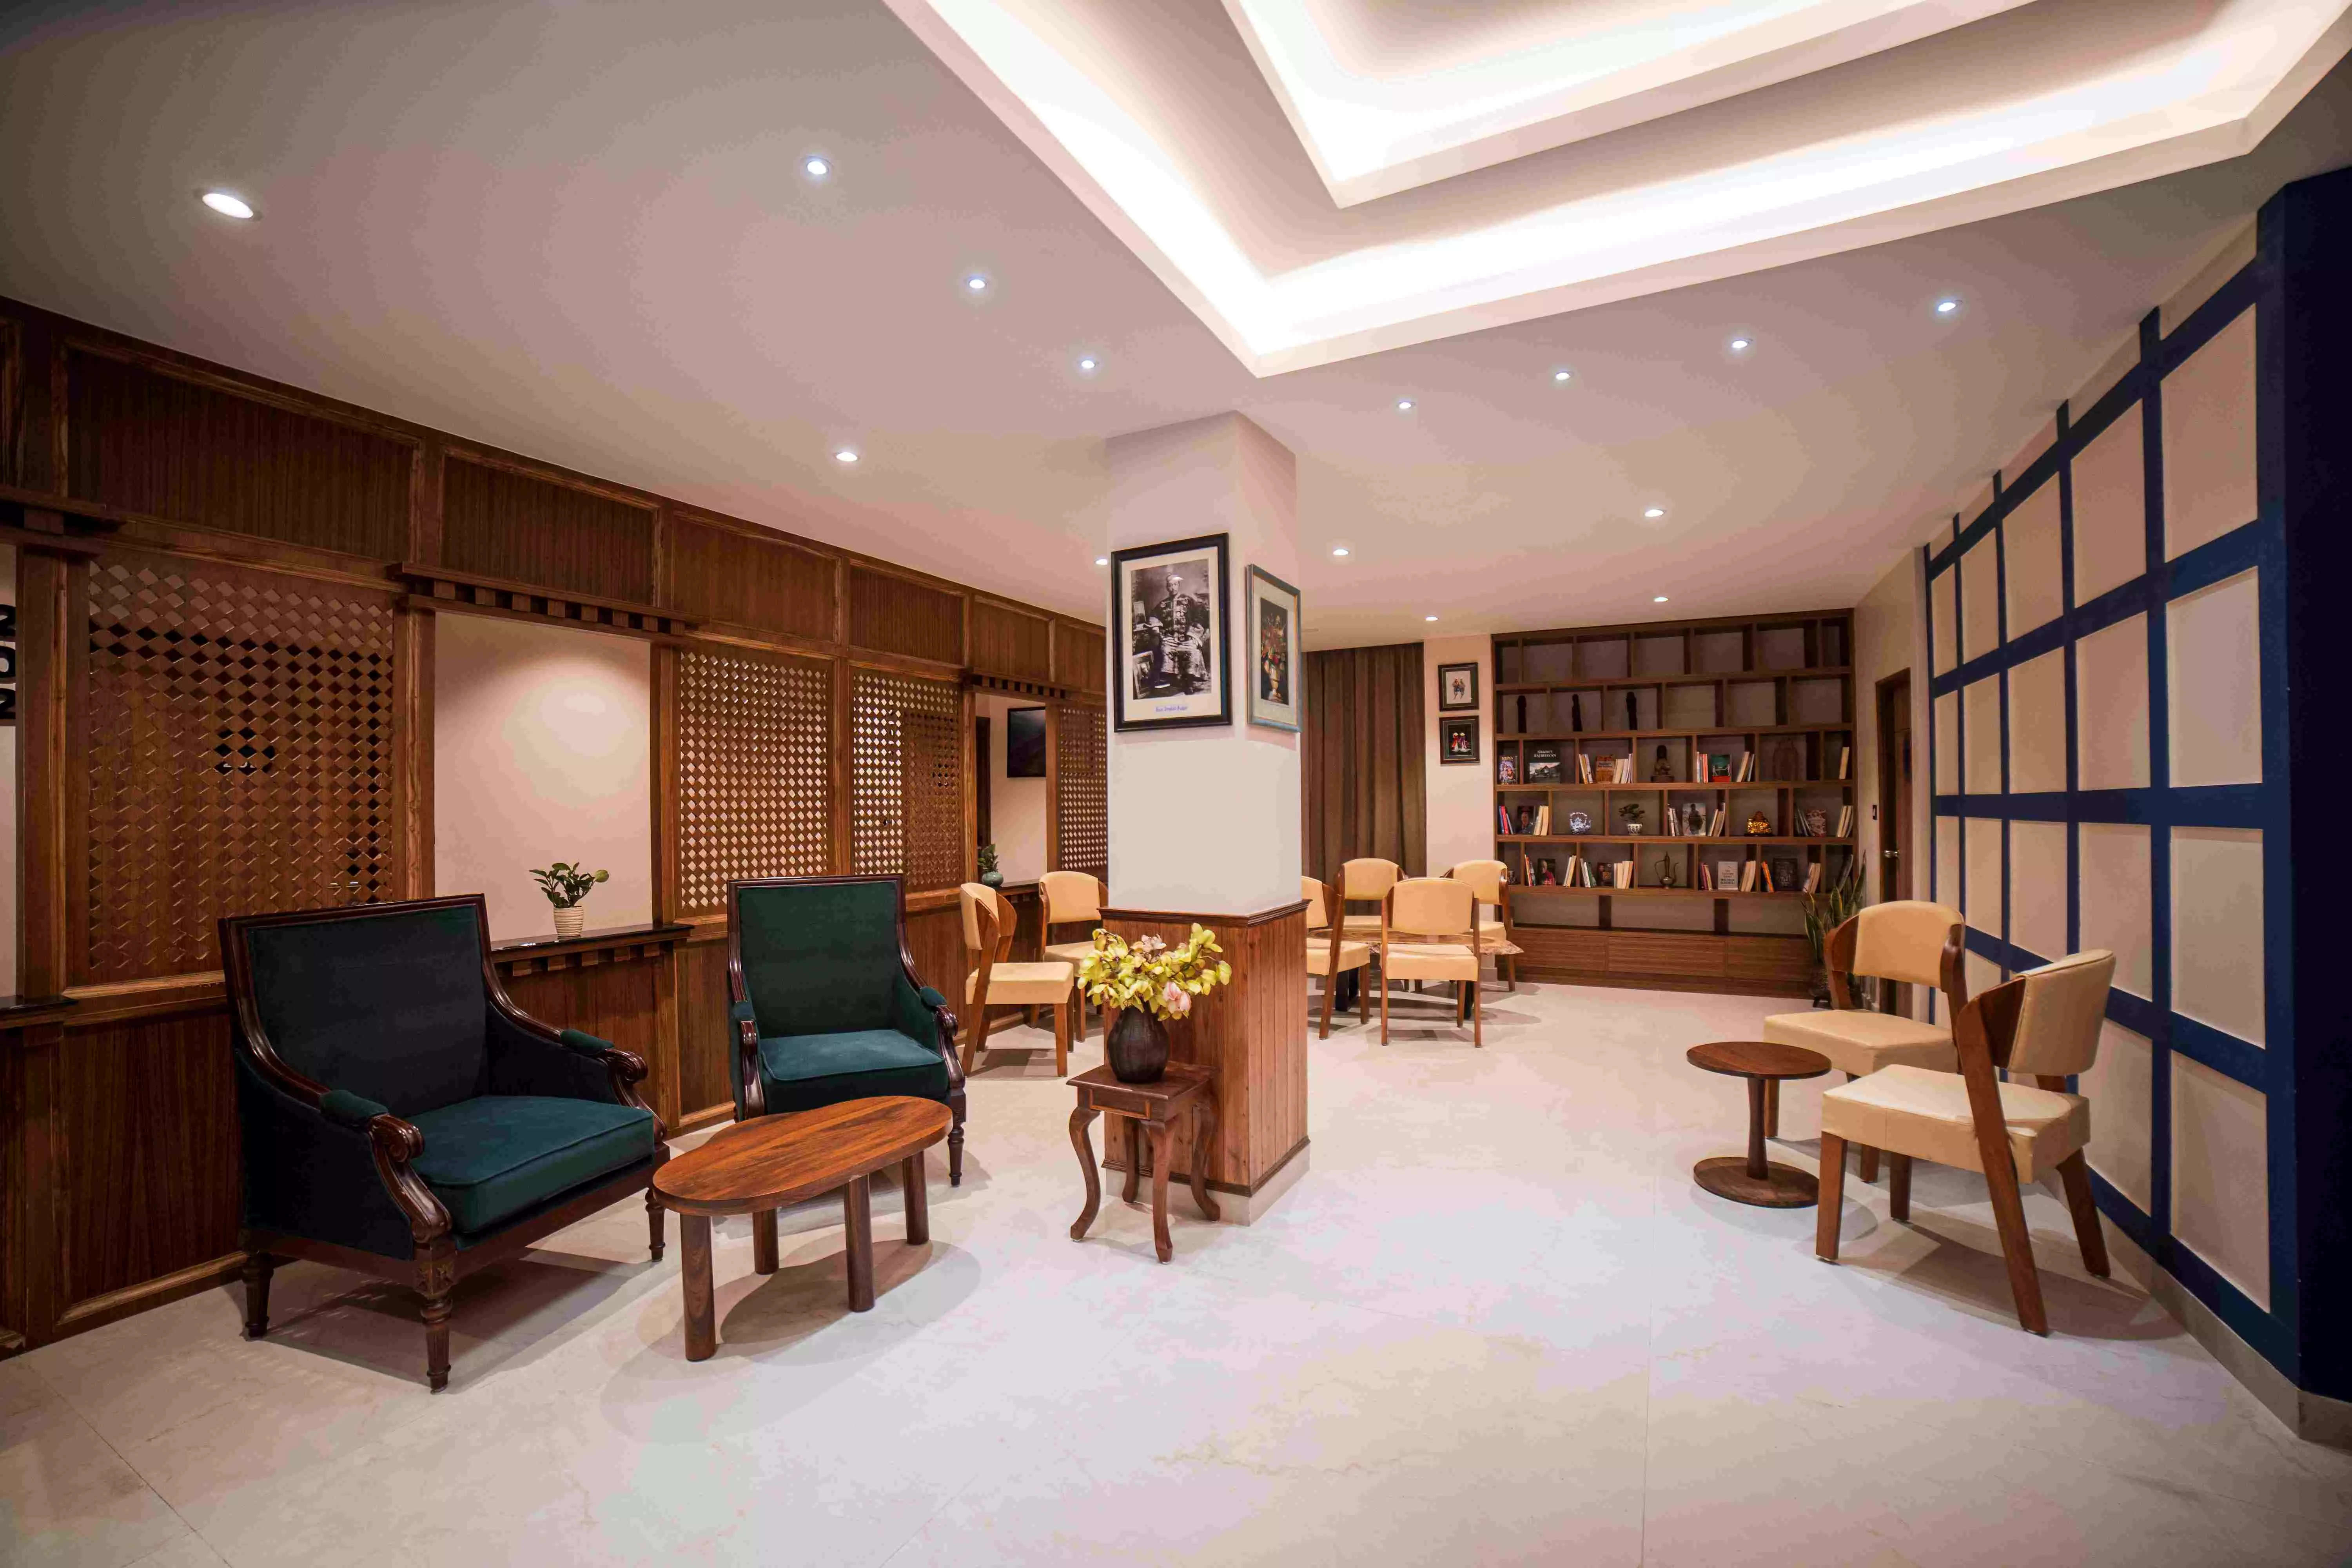 Sarovar Hotels & Resorts expands its Hajj portfolio with Tulip Inn, Shravasti, UP, ET HospitalityWorld